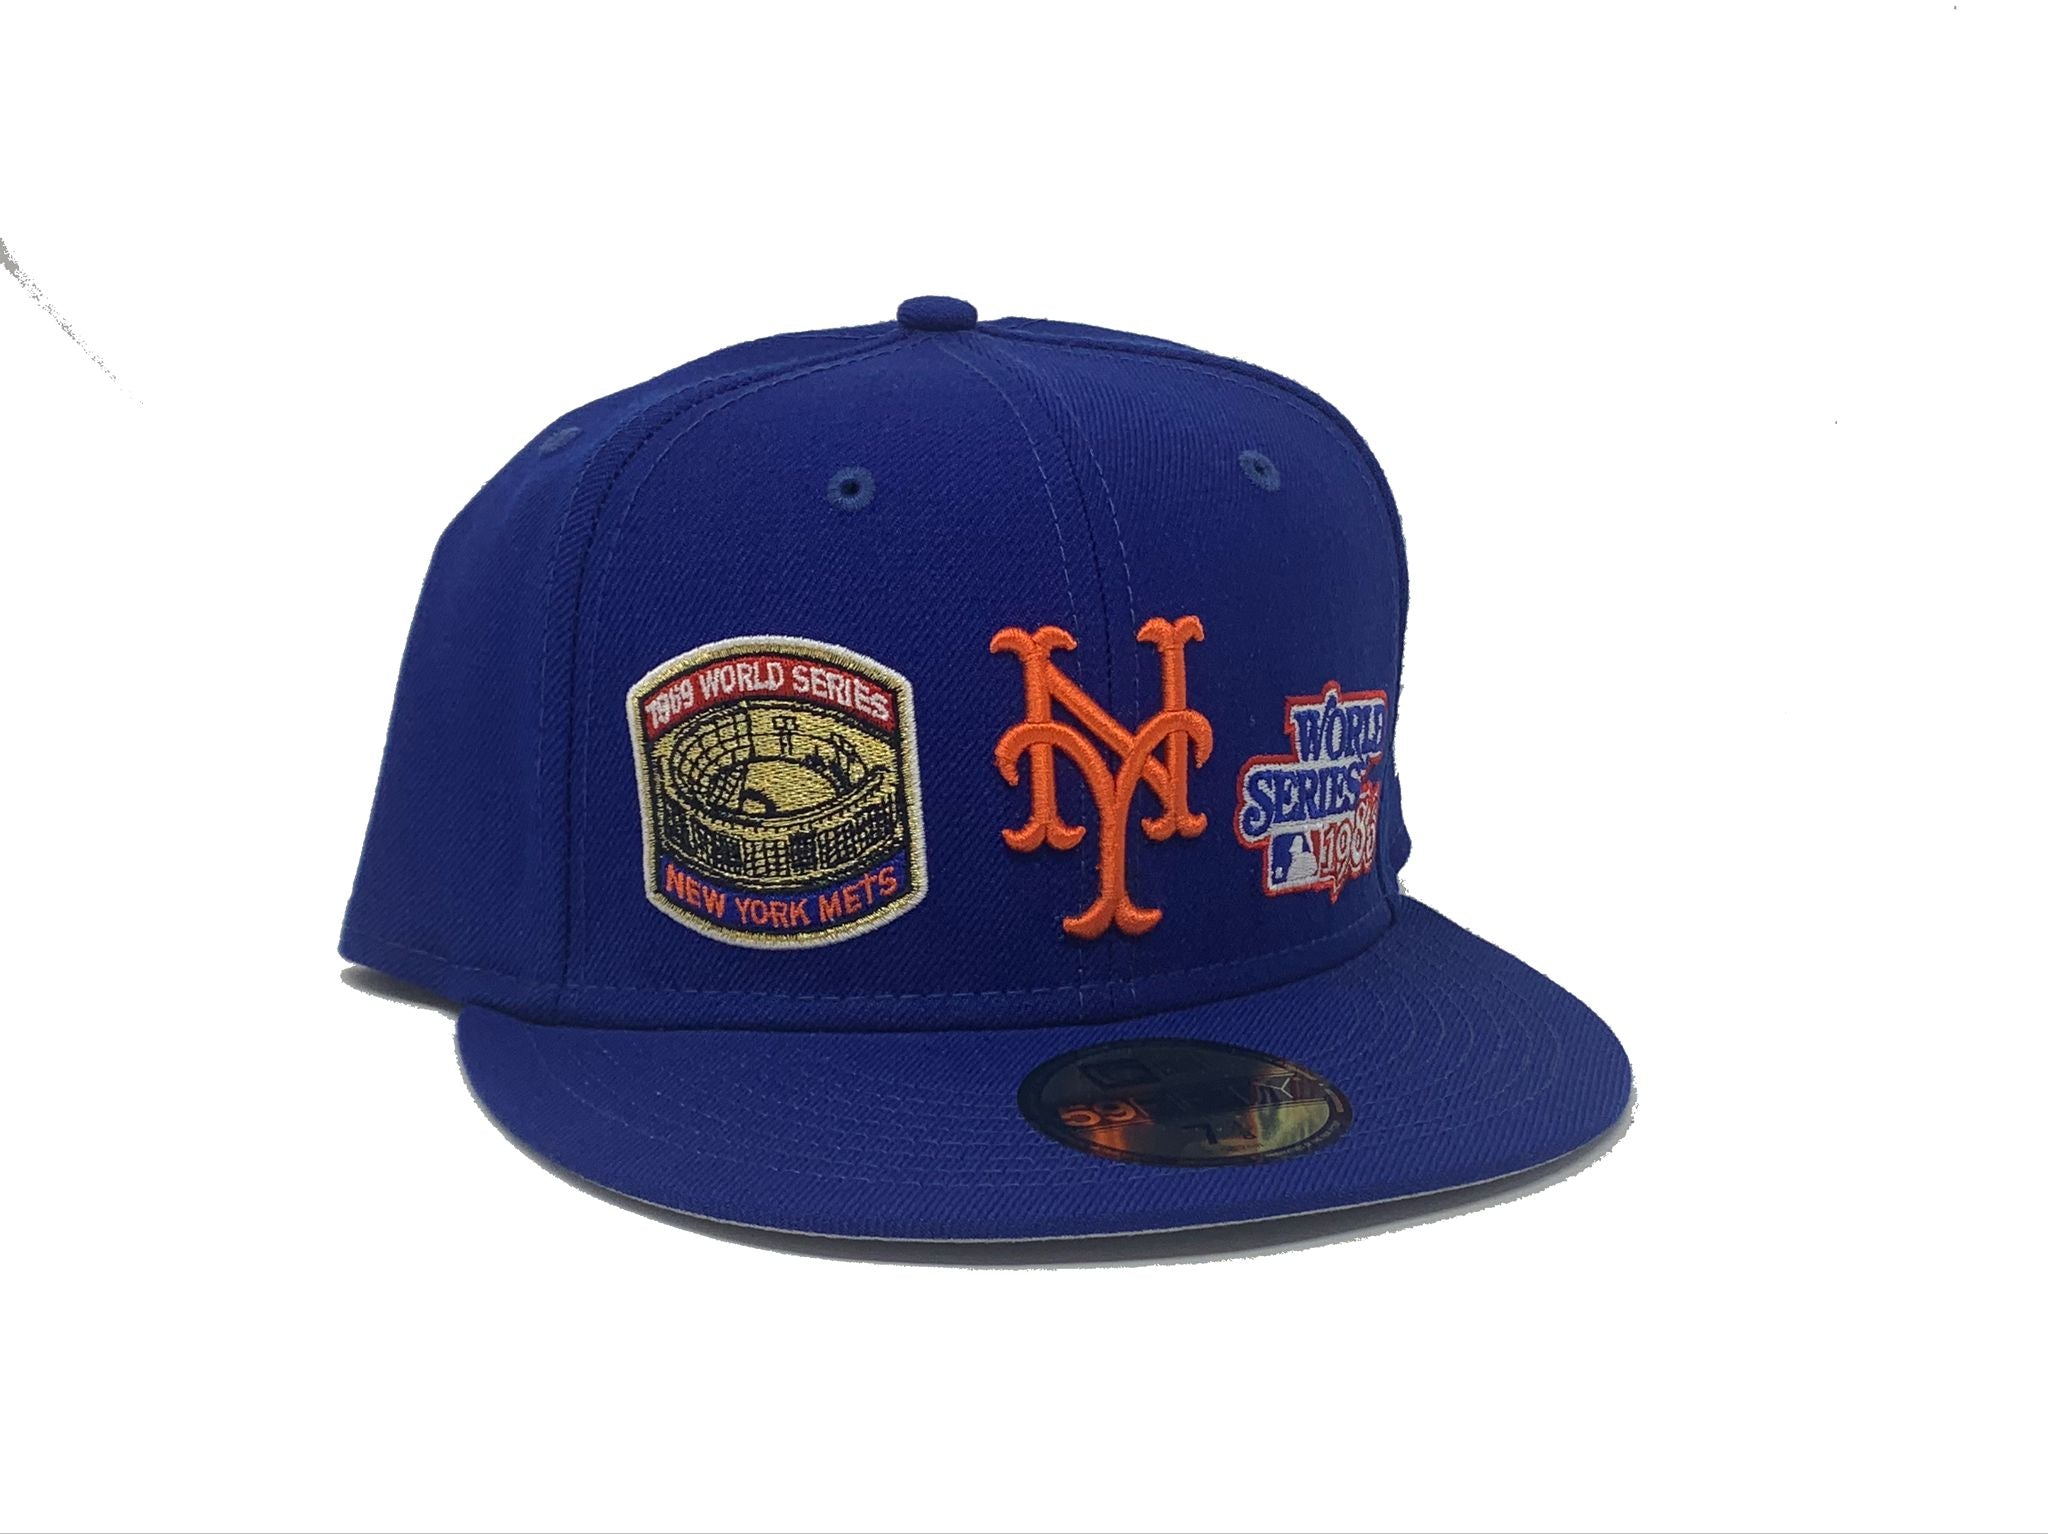 New York Mets RALLY CAP - NEW ERA SNAPBACK Hat Cap Size M-L